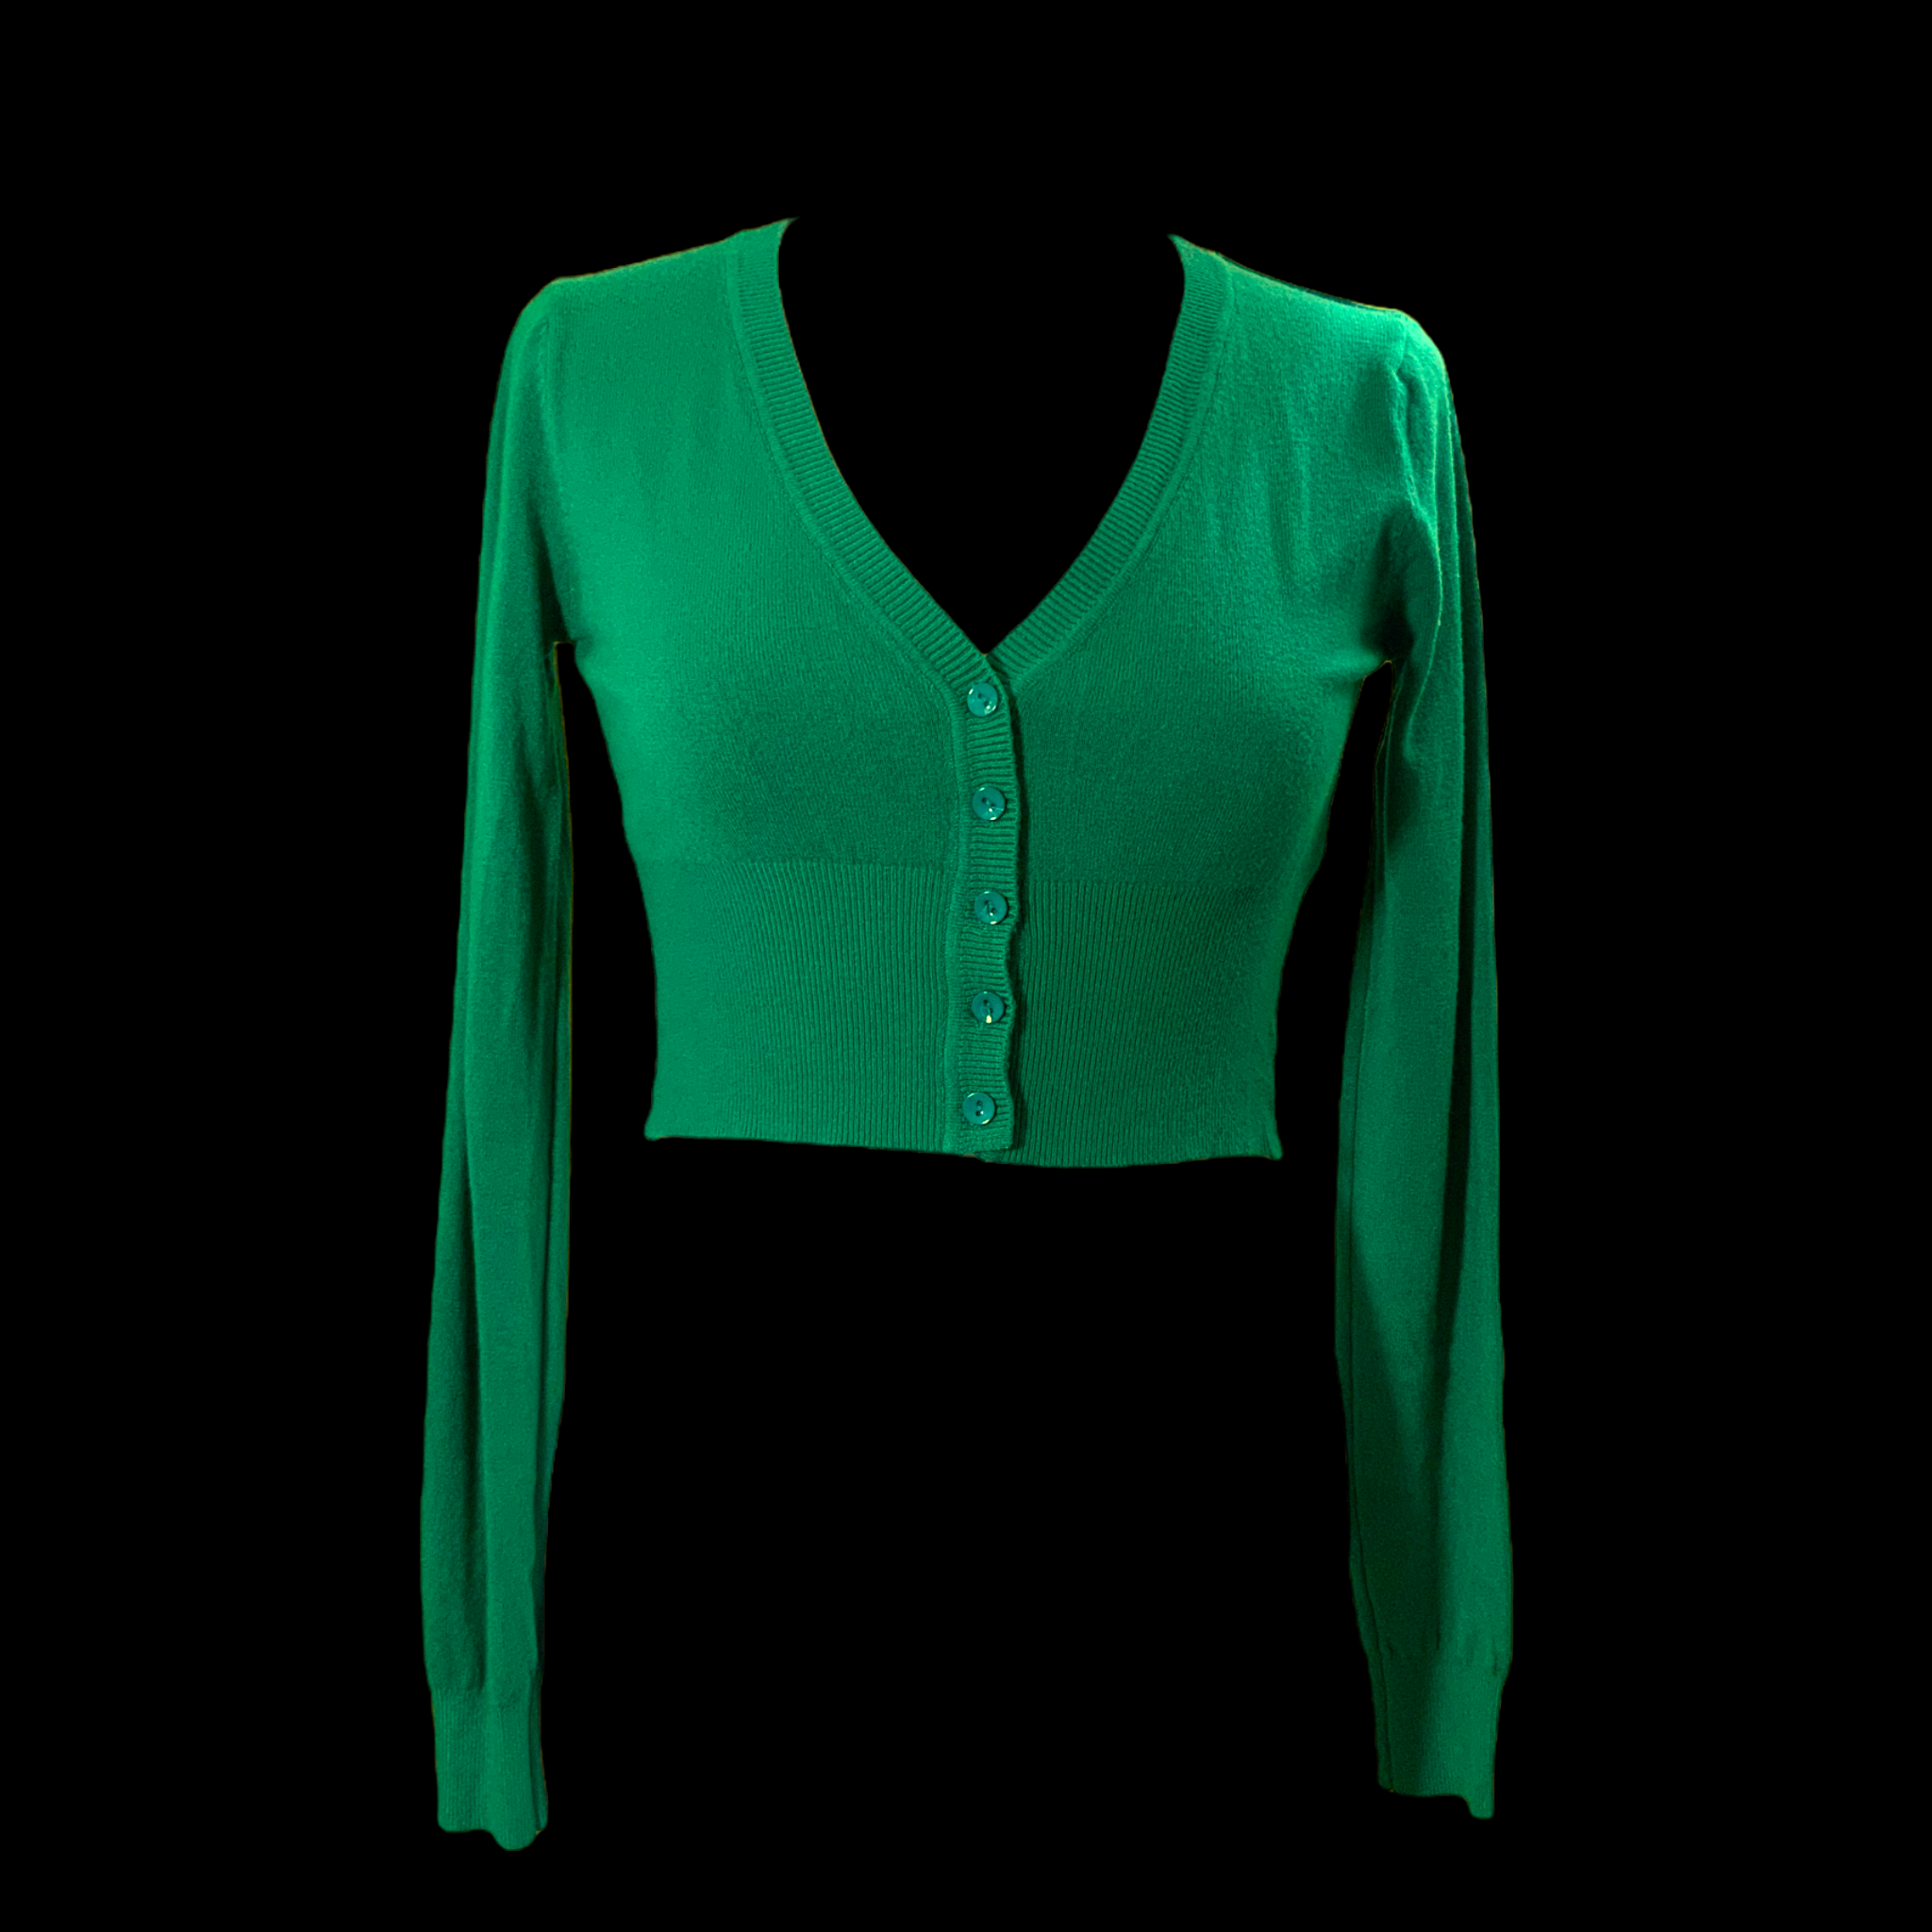 Giacchino “Billie” verde smeraldo